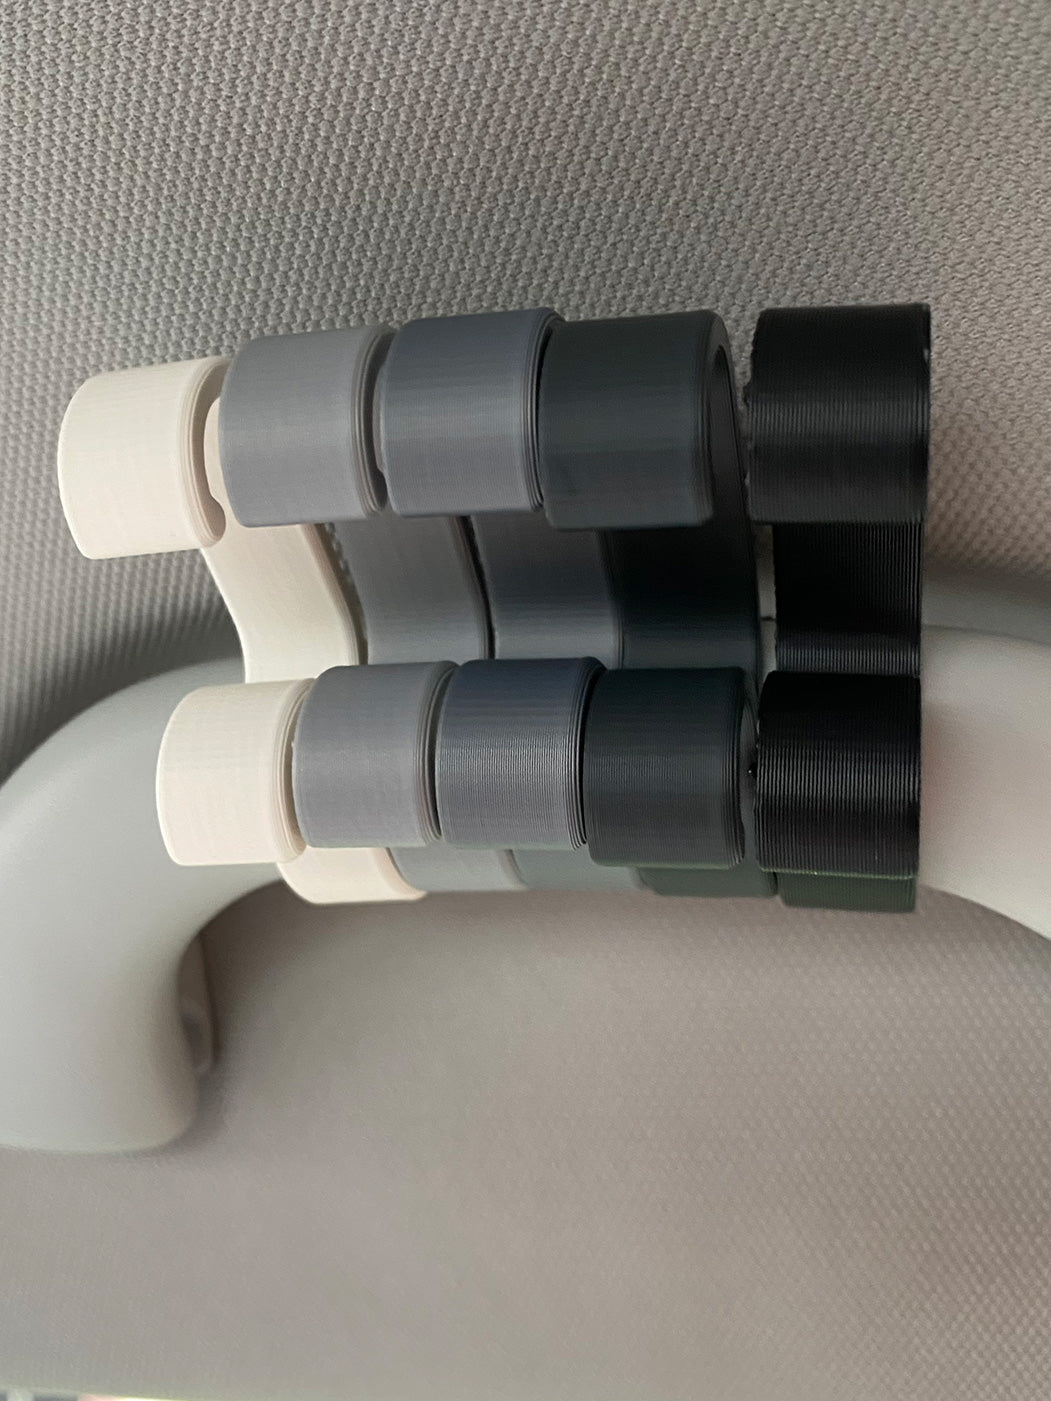 Doppelhaken Fahrerraum - individuell und 3D gedruckt